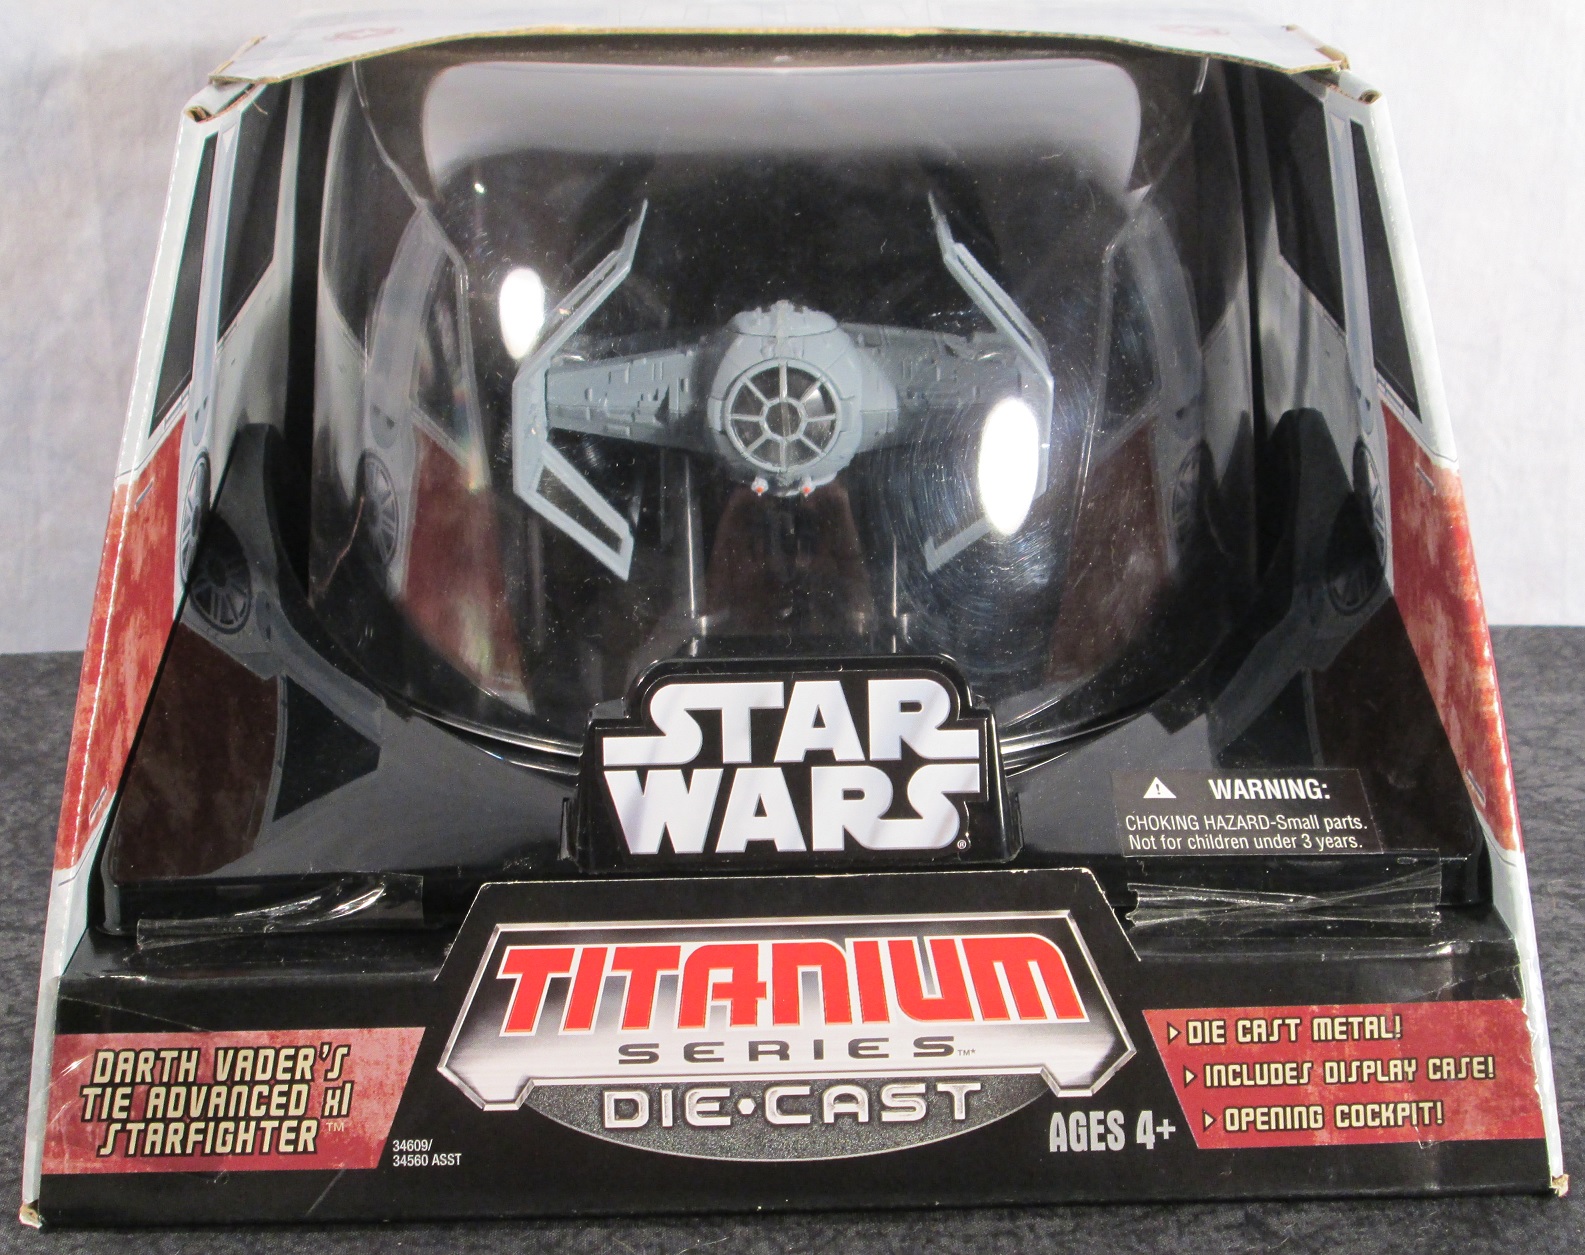 Star Wars Titanium Ultra Darth Vader's TIE Advanced X1 Starfighter 